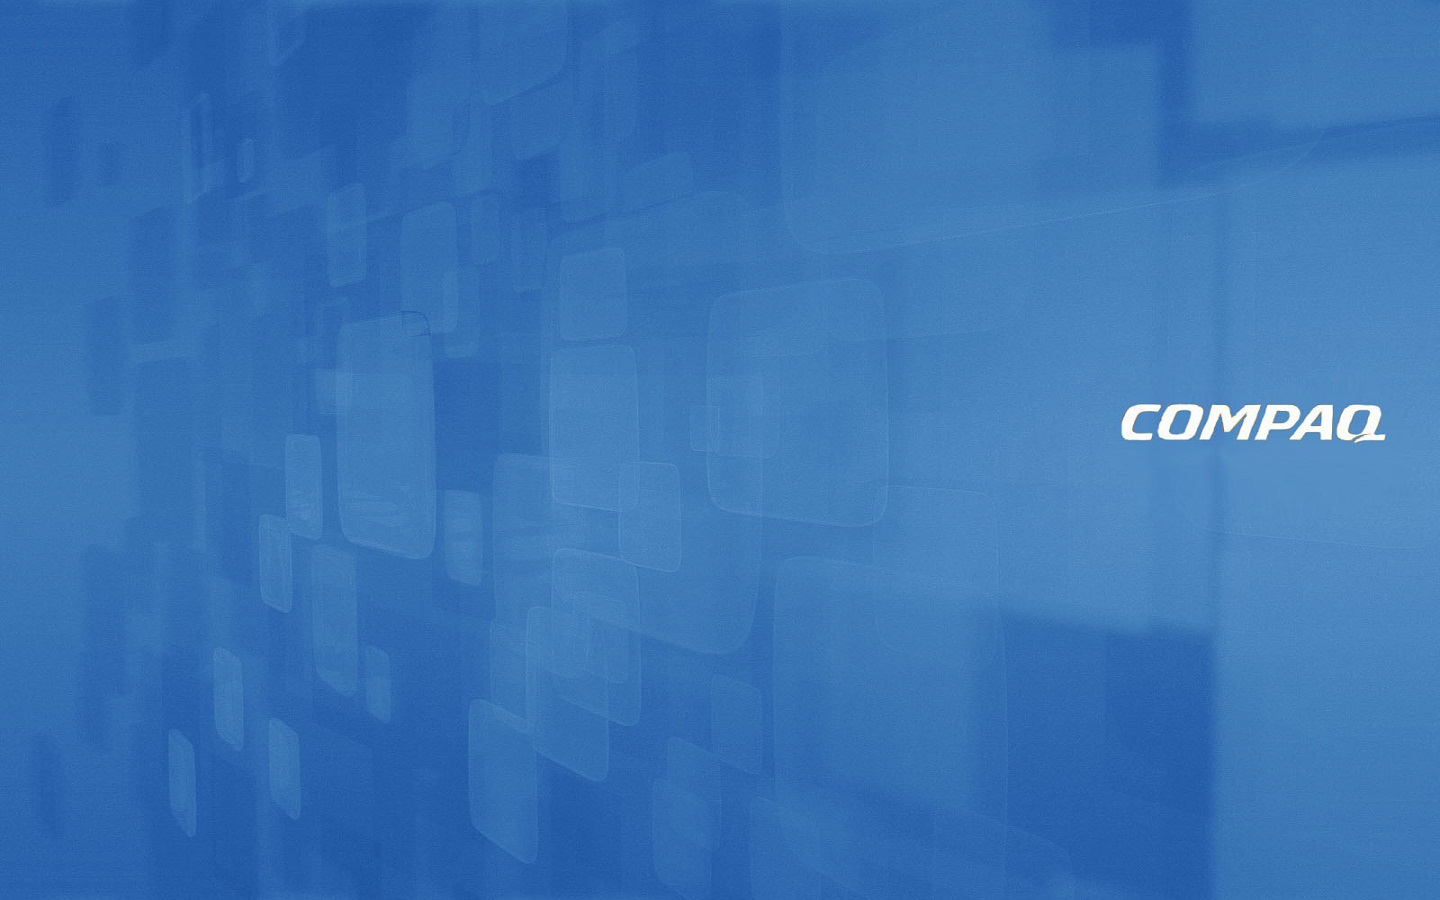 Compaq Logo compaq logo wallpaper Logo Database